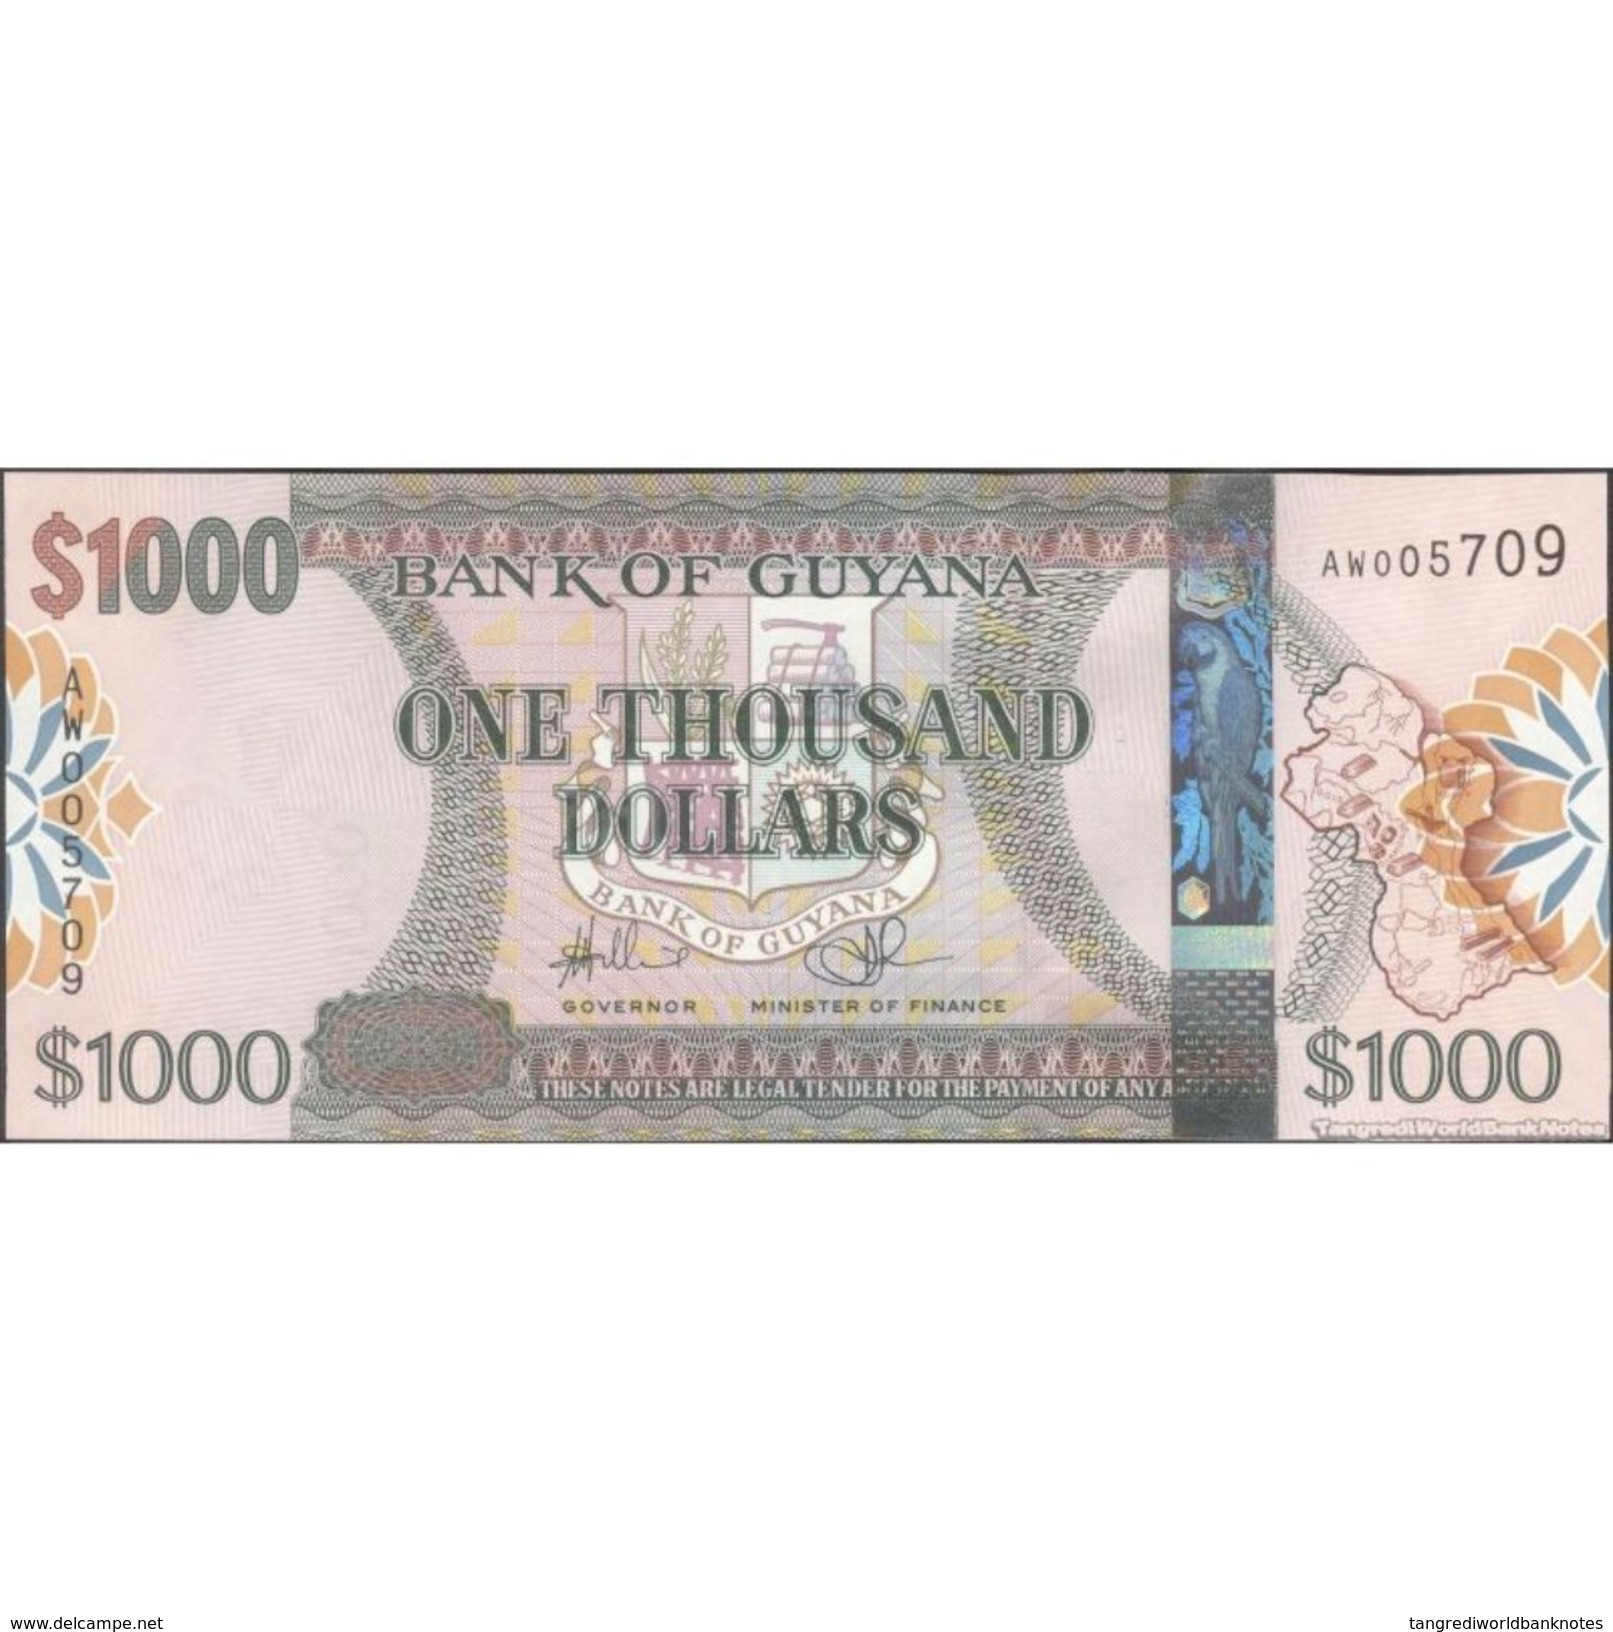 TWN - GUYANA 39 - 1000 1.000 Dollars 2011 Prefix AW - Signatures: Williams & A. Singh - Printer: G&D UNC - Guyana